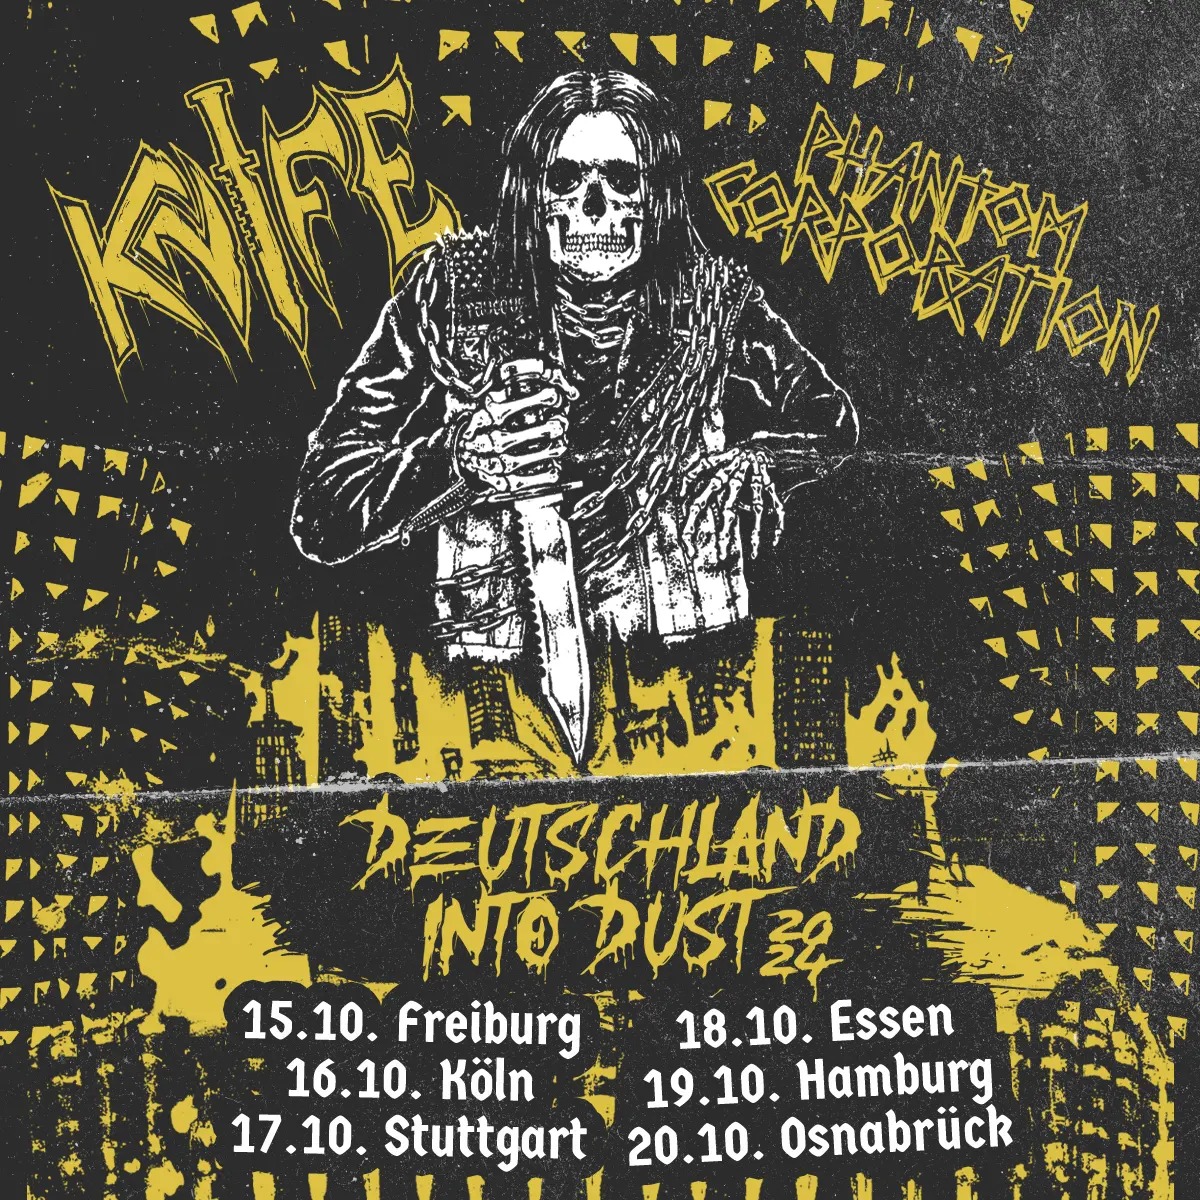 KNIFE announce 'Deutschland Into Dust' tour!🔪🤘 15.10. Freiburg – Crash 16.10. Köln – Club Volta 17.10. Stuttgart – Der Schwarze Keiler 18.10. Essen – Don’t Panic 19.10. Hamburg – Bambi Galore 20.10. Osnabrück – Bastard Club